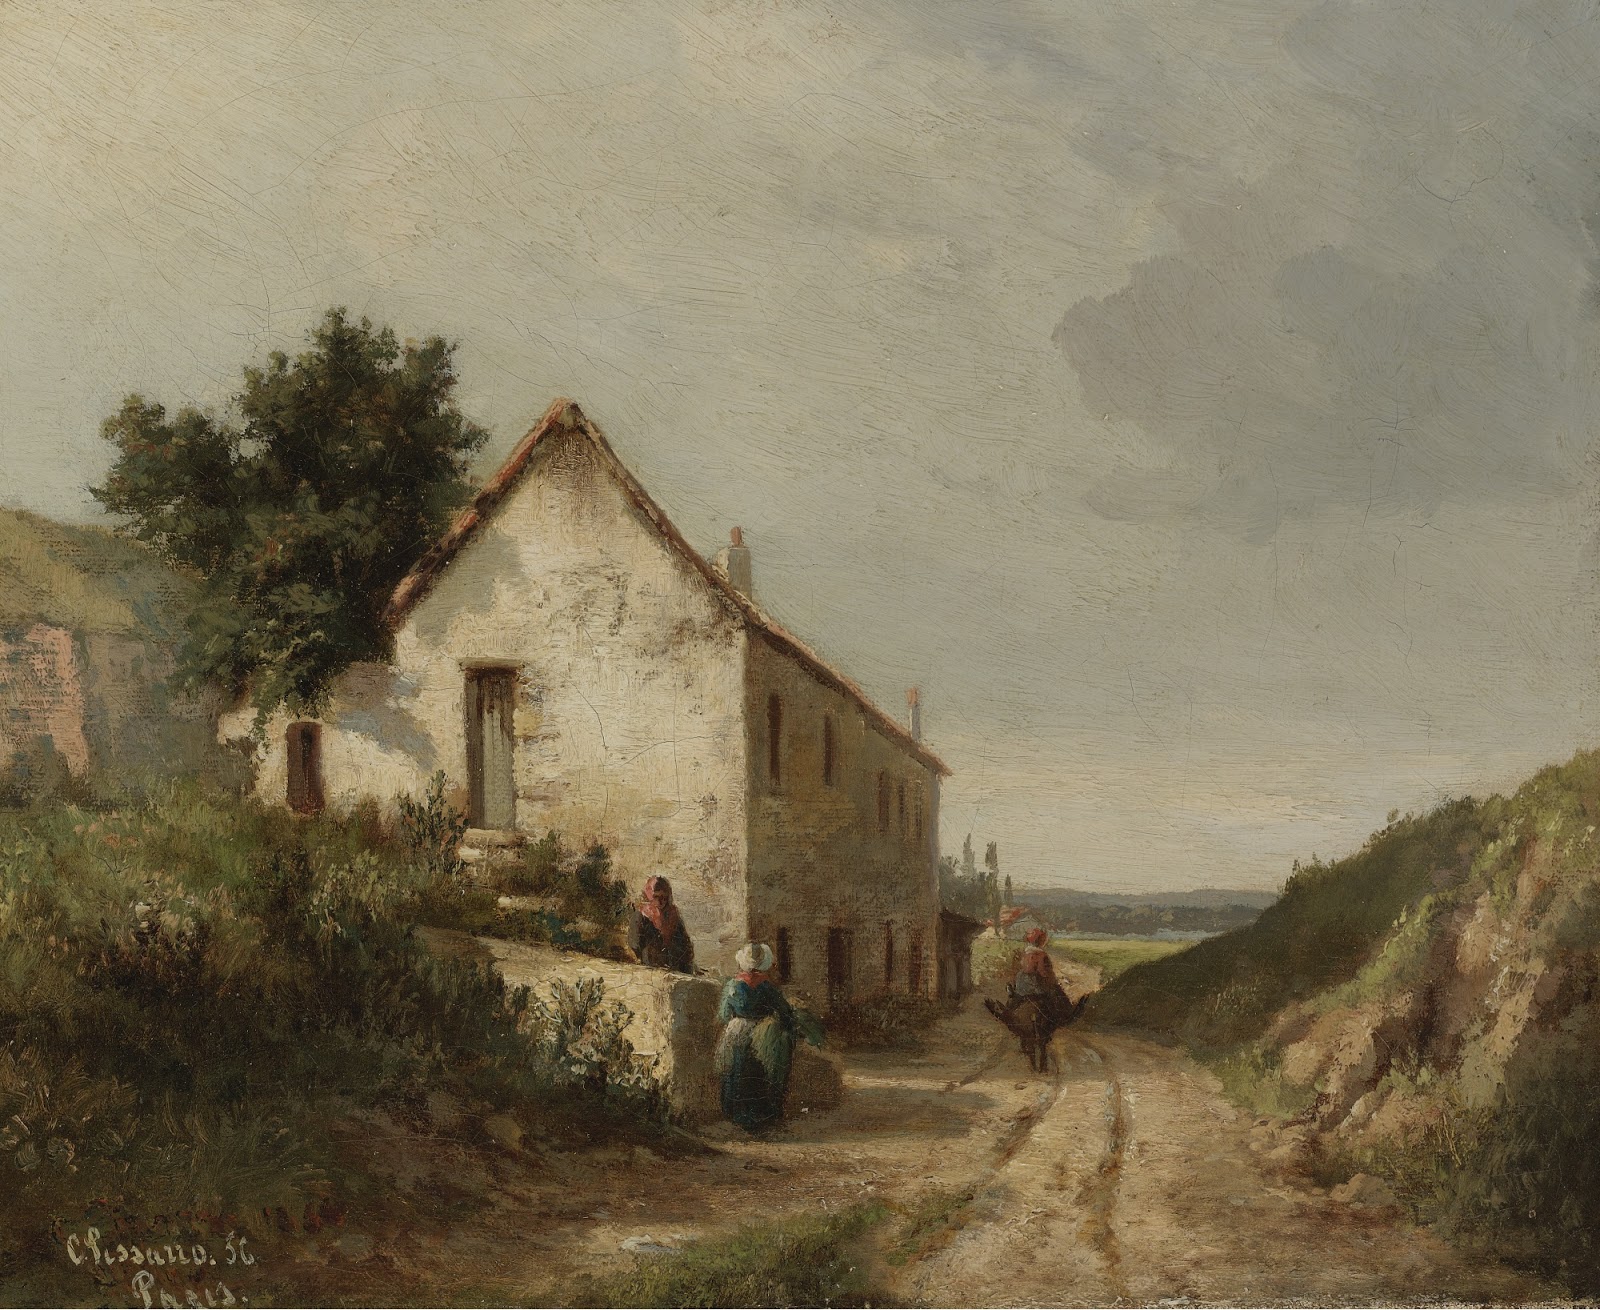 Camille+Pissarro-1830-1903 (423).jpg